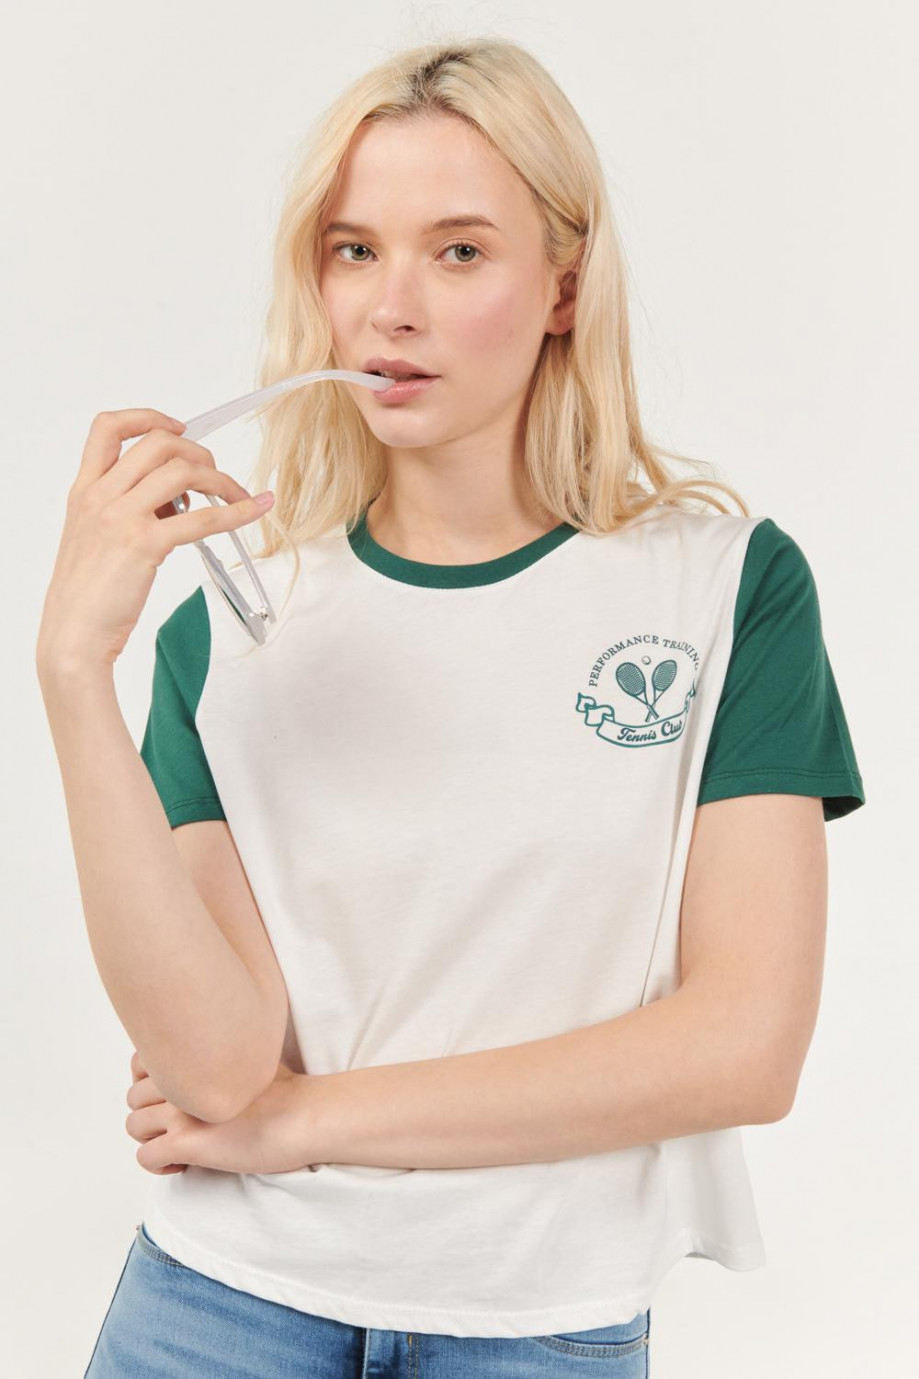 Camiseta manga corta crema clara con estampado deportivo college